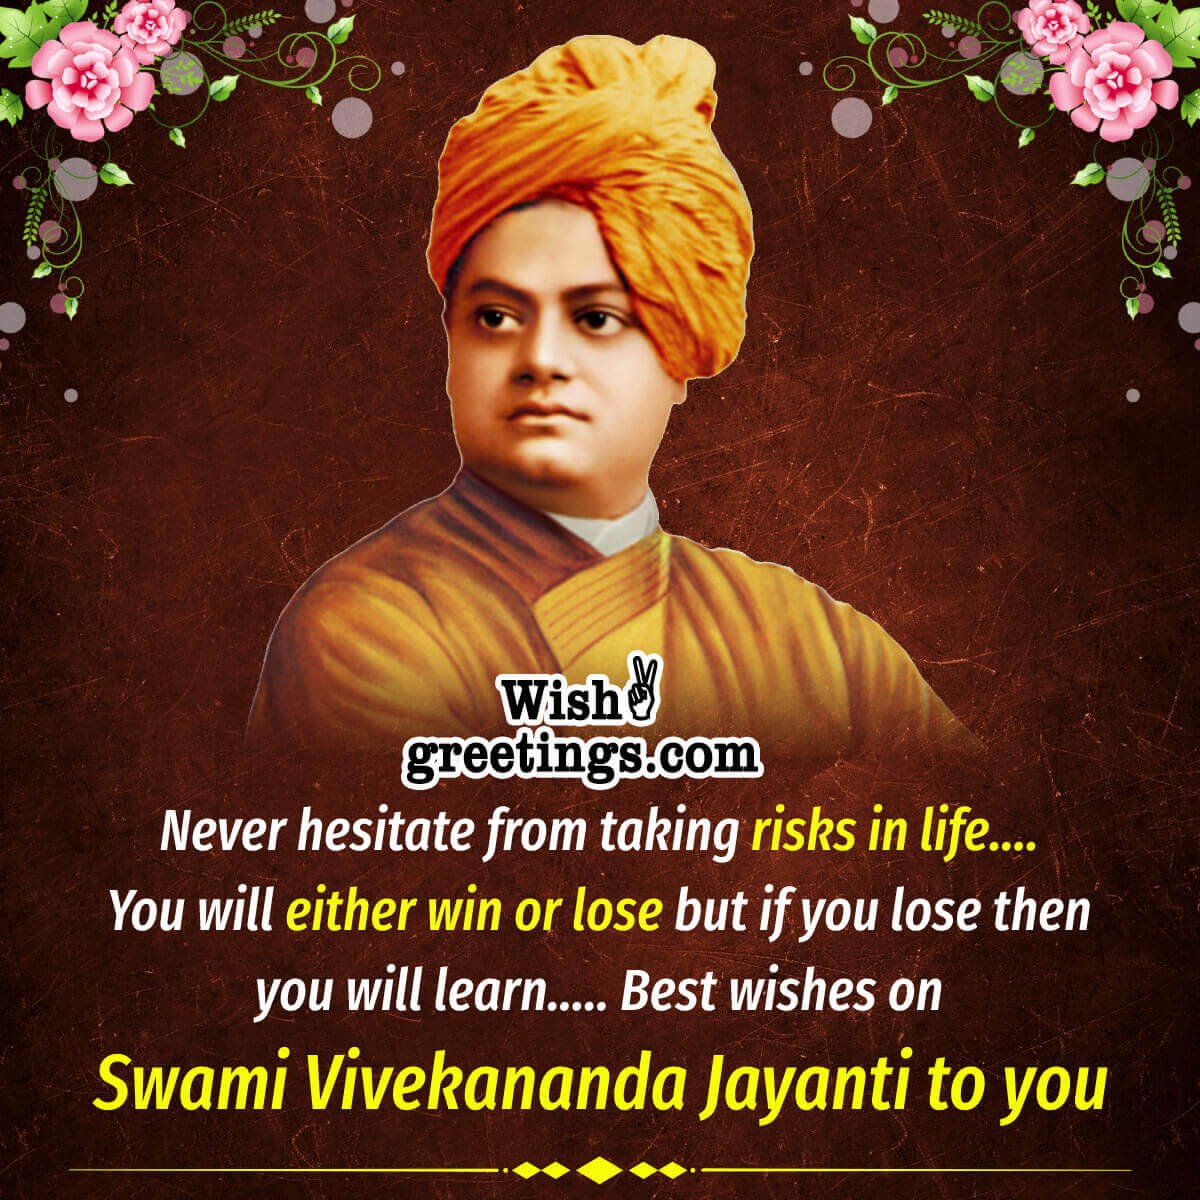 Swami Vivekananda Jayanti Wishes Messages